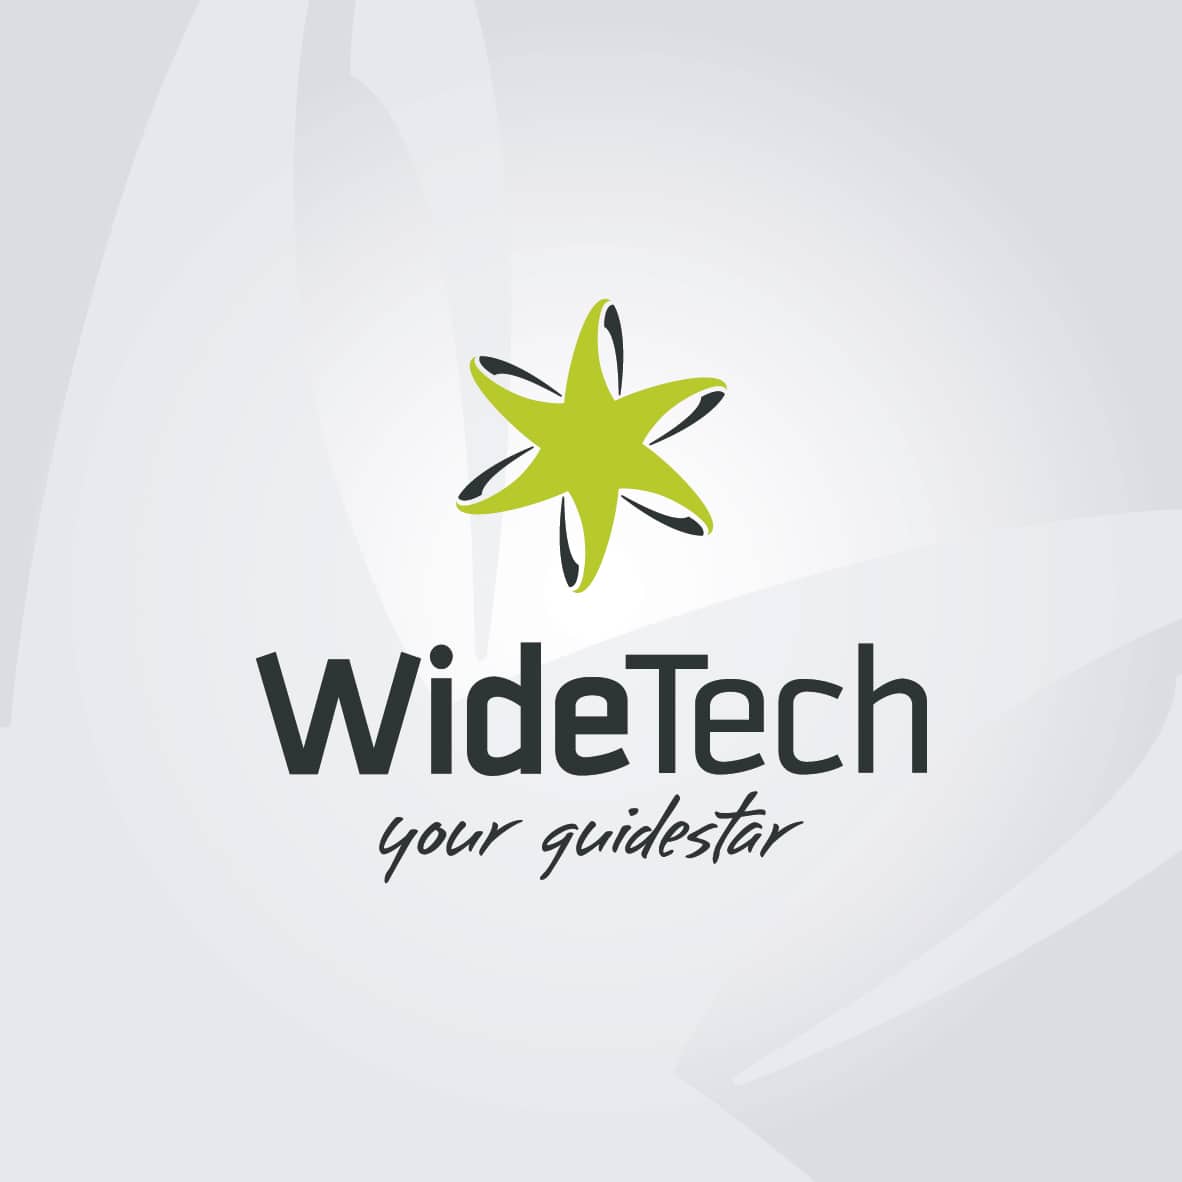 (c) Widetech.co